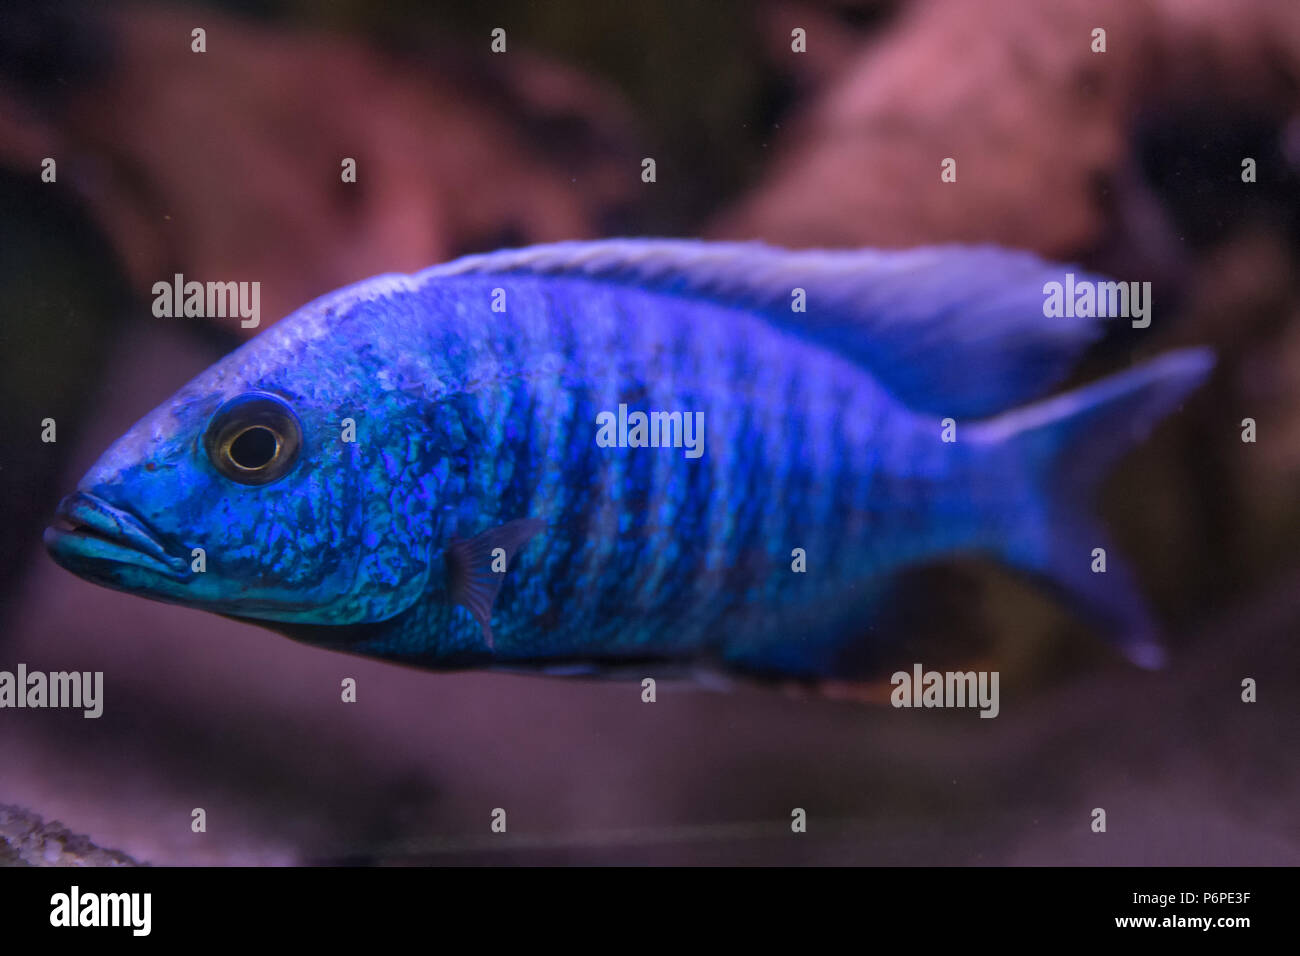 Malawi cichlids. Fish of the genus Cynotilapia in the aquarium. Stock Photo